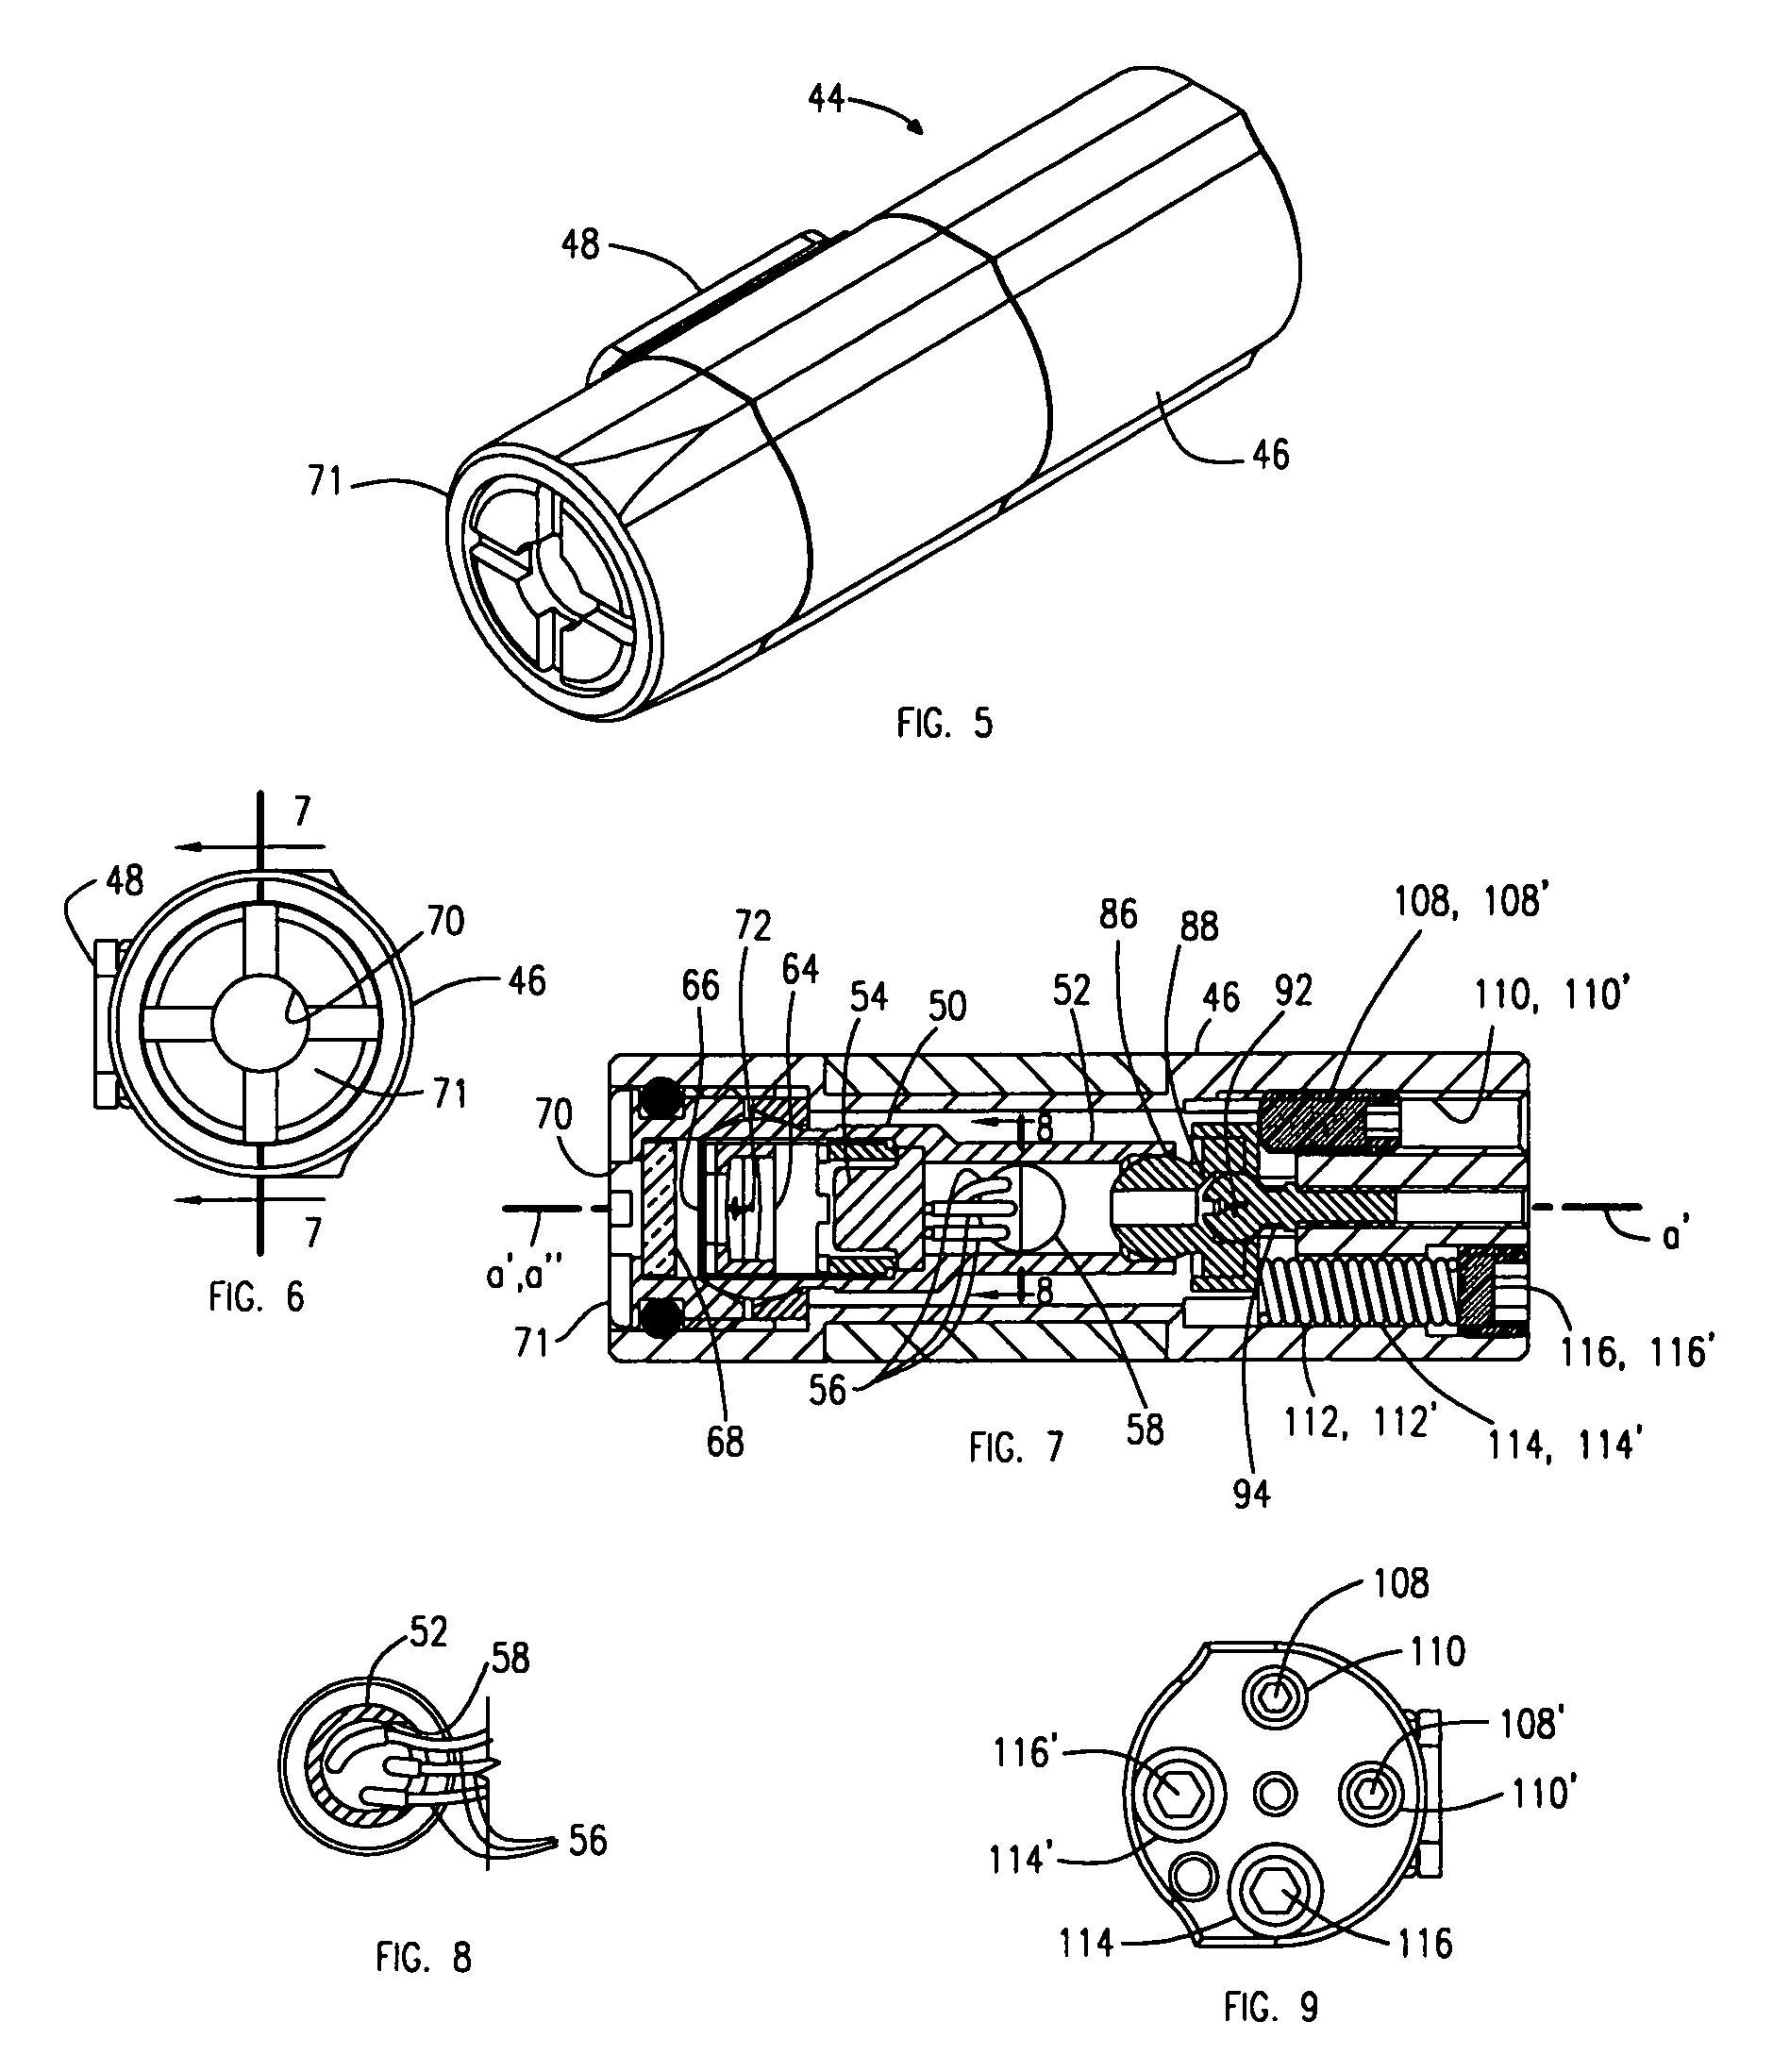 Laser aiming apparatus using a rocker